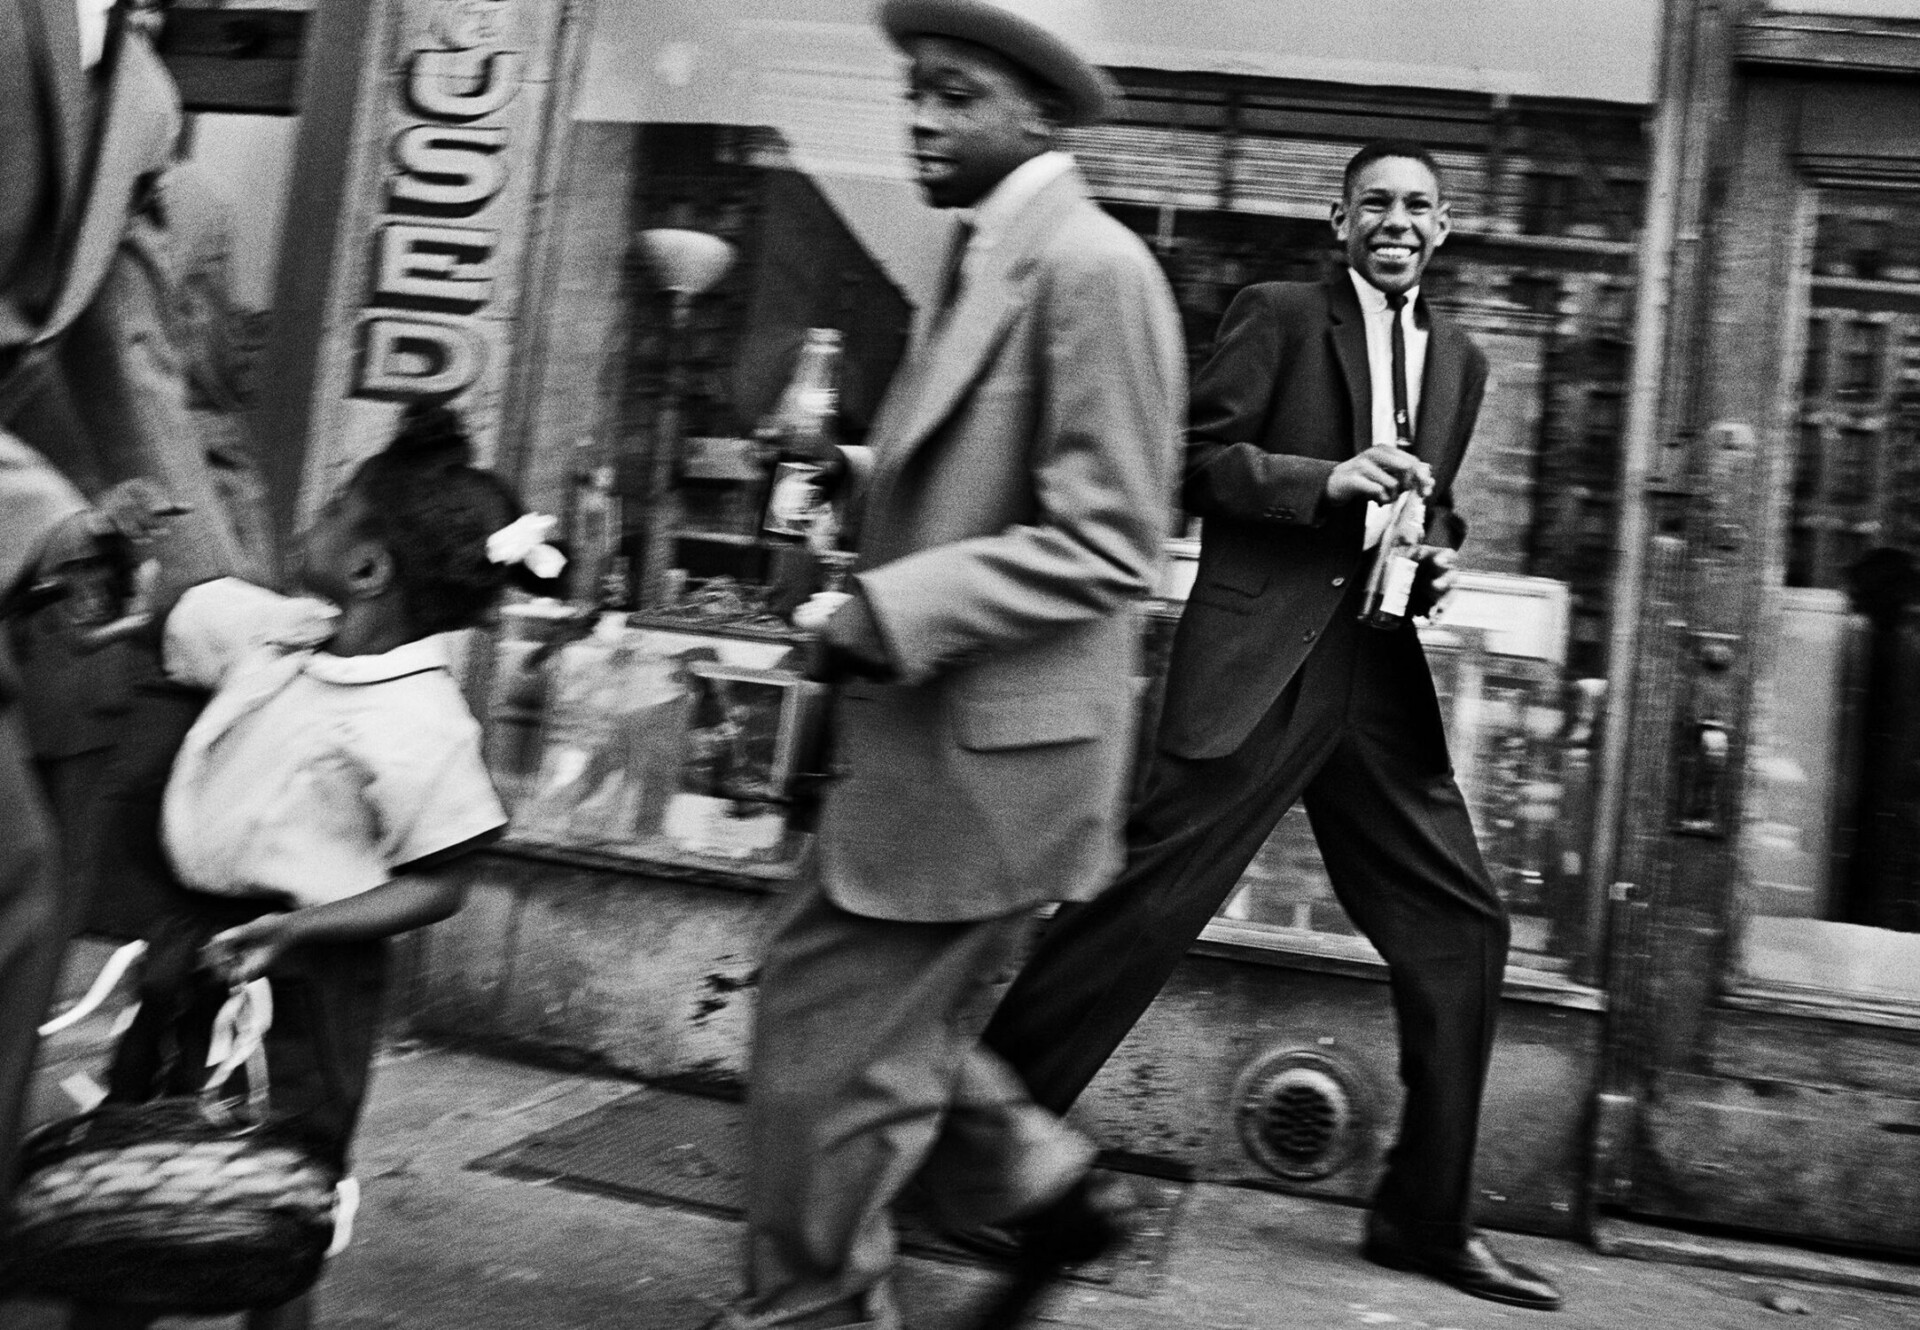 William Klein, Moves and Pepsi, Harlem, New York, 1955. © William Klein